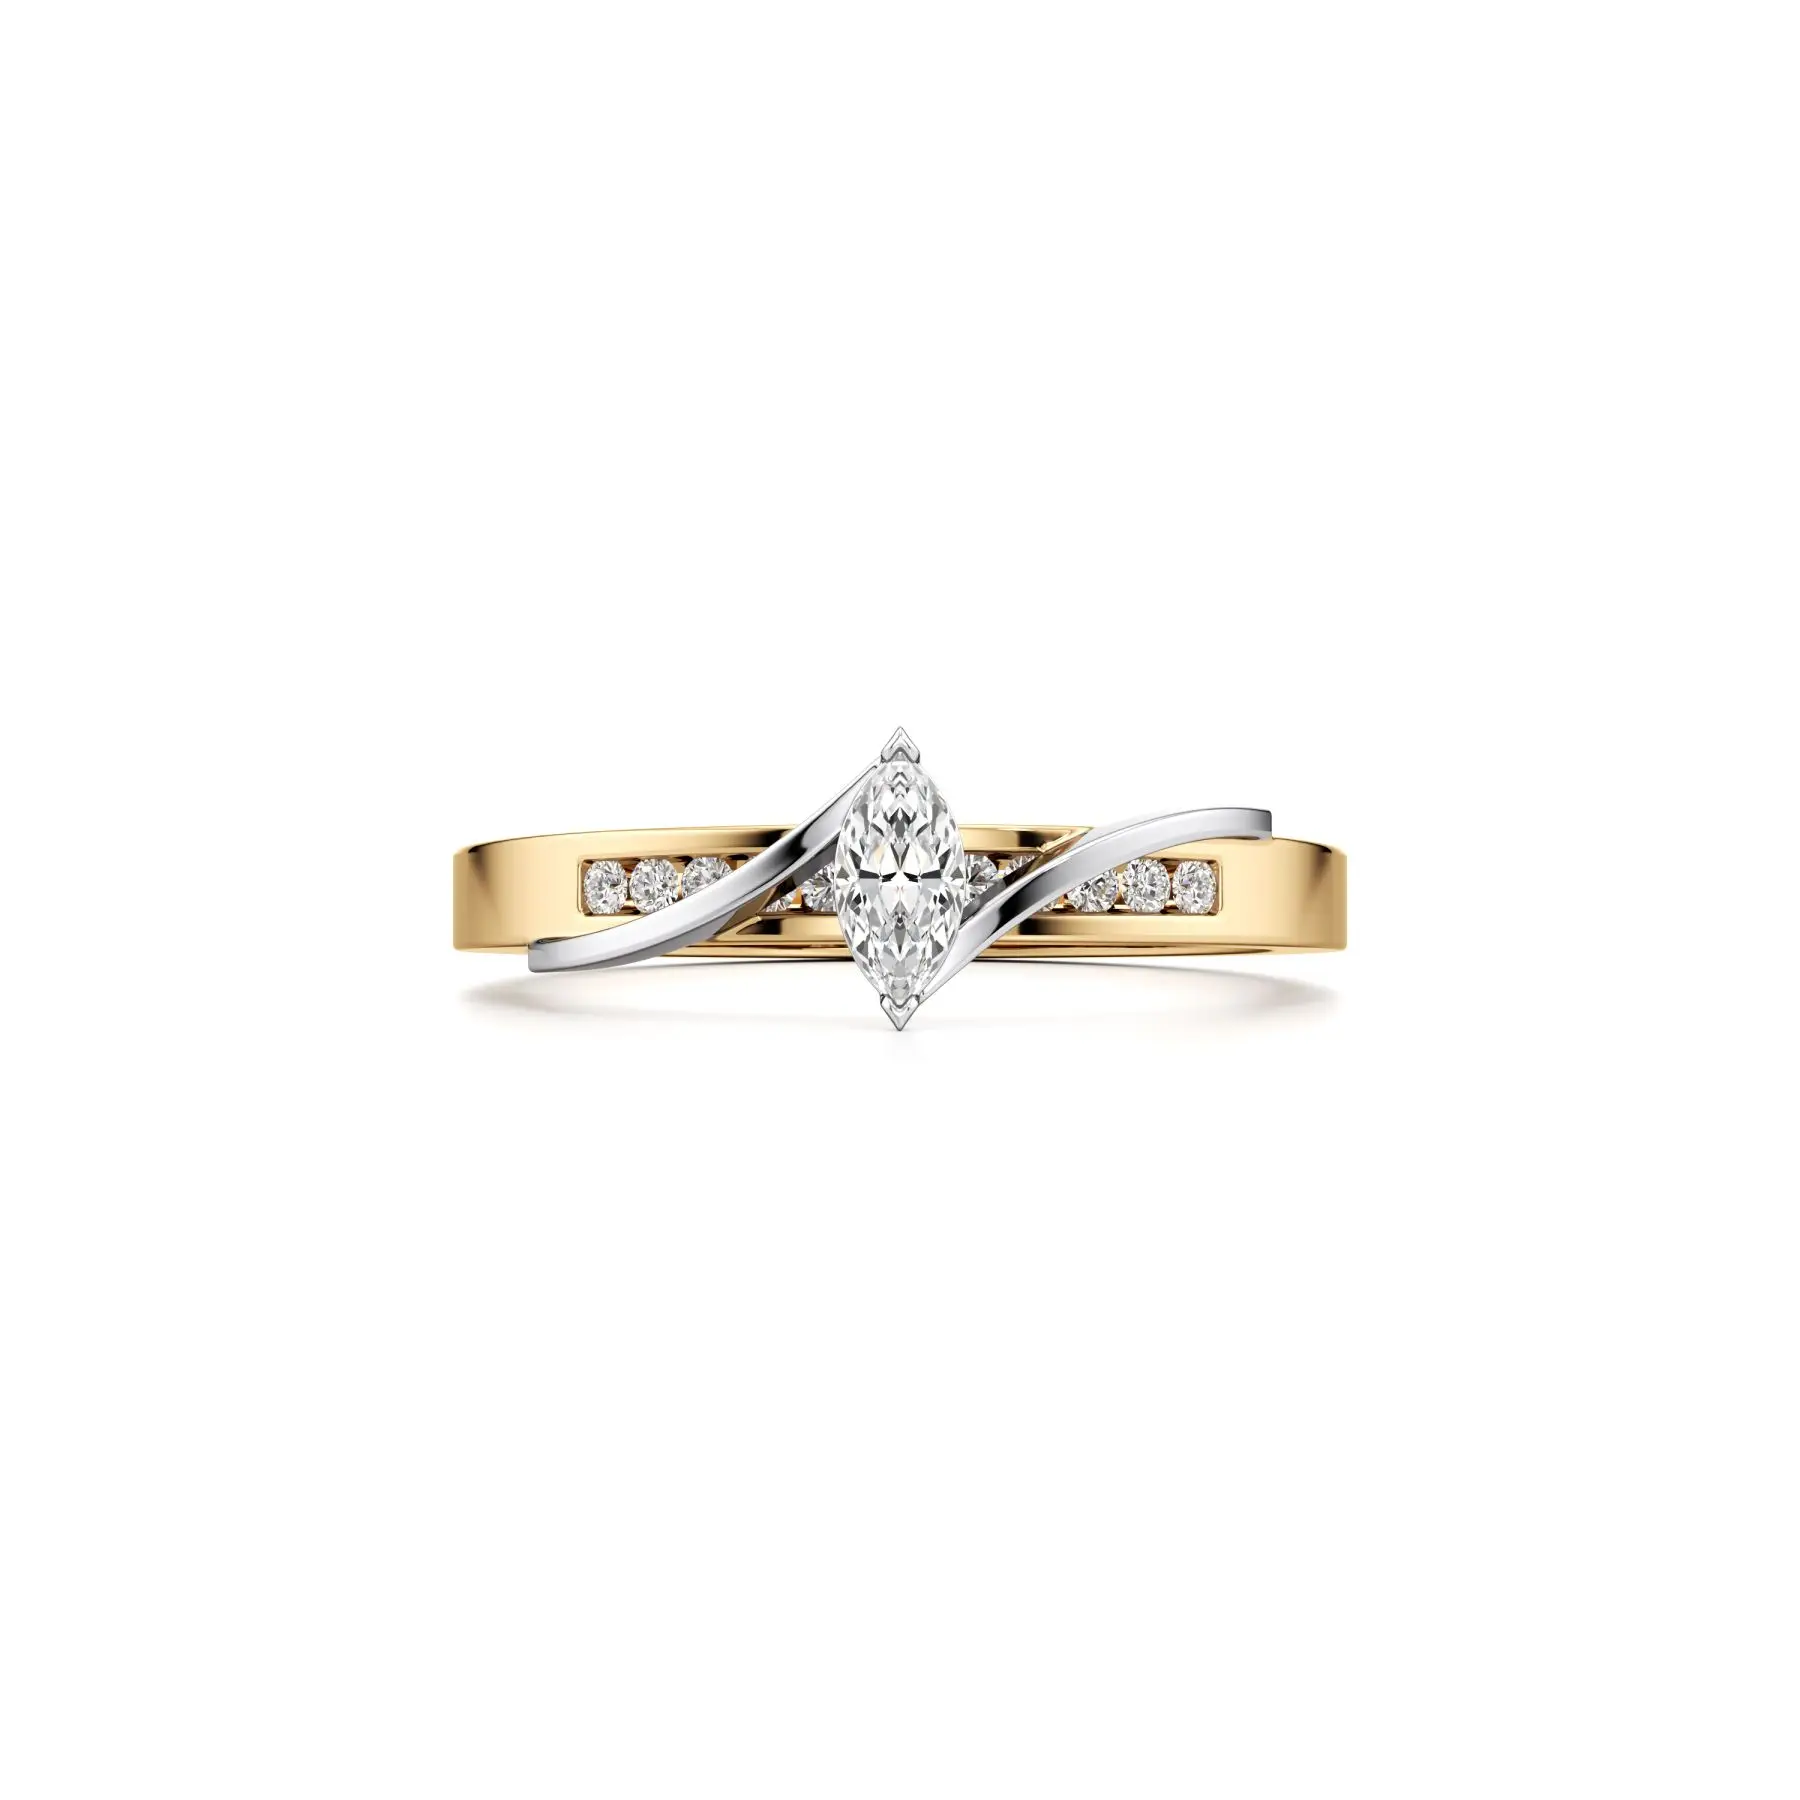 Queen Femme Diamond Ring in Yellow 10k Gold